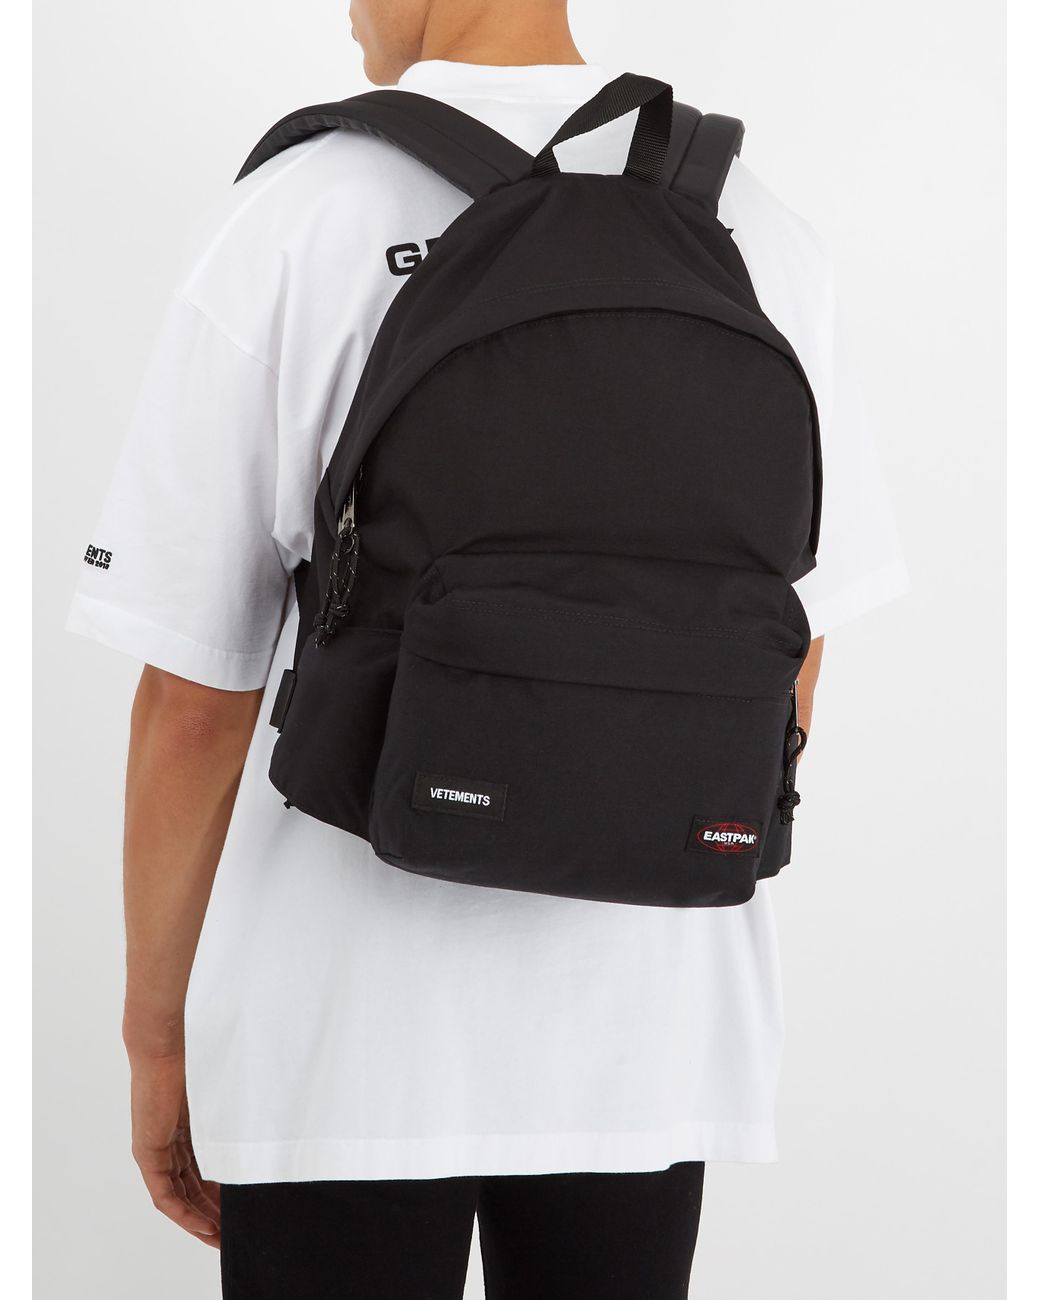 Vetements Canvas X Eastpak Backpack in Black for Men | Lyst